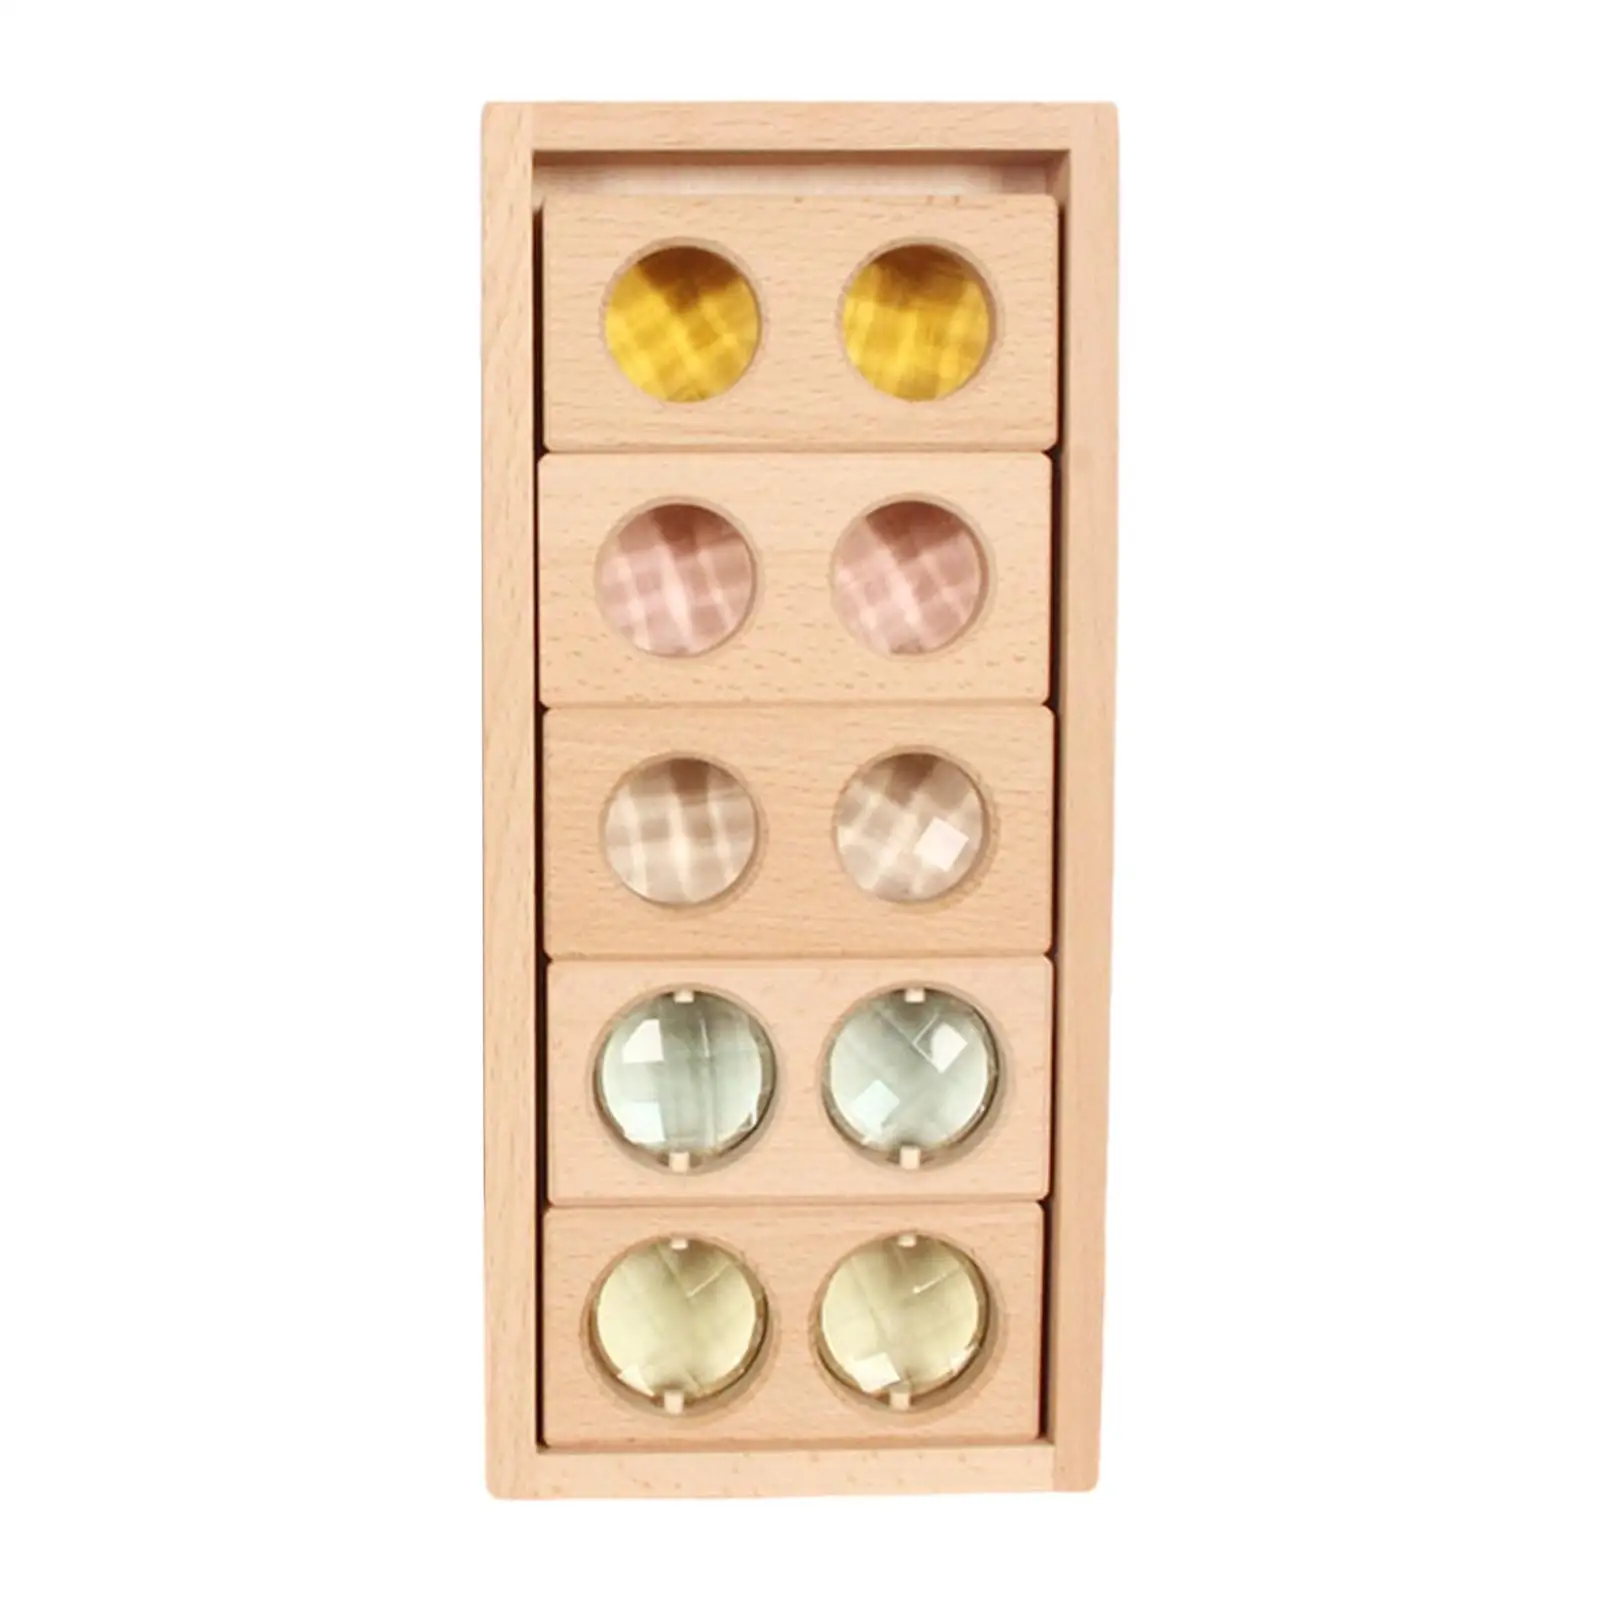 Wooden Toy Goodie Bag Fillers Colorful Rainbow Gemstone Blocks for Preschool